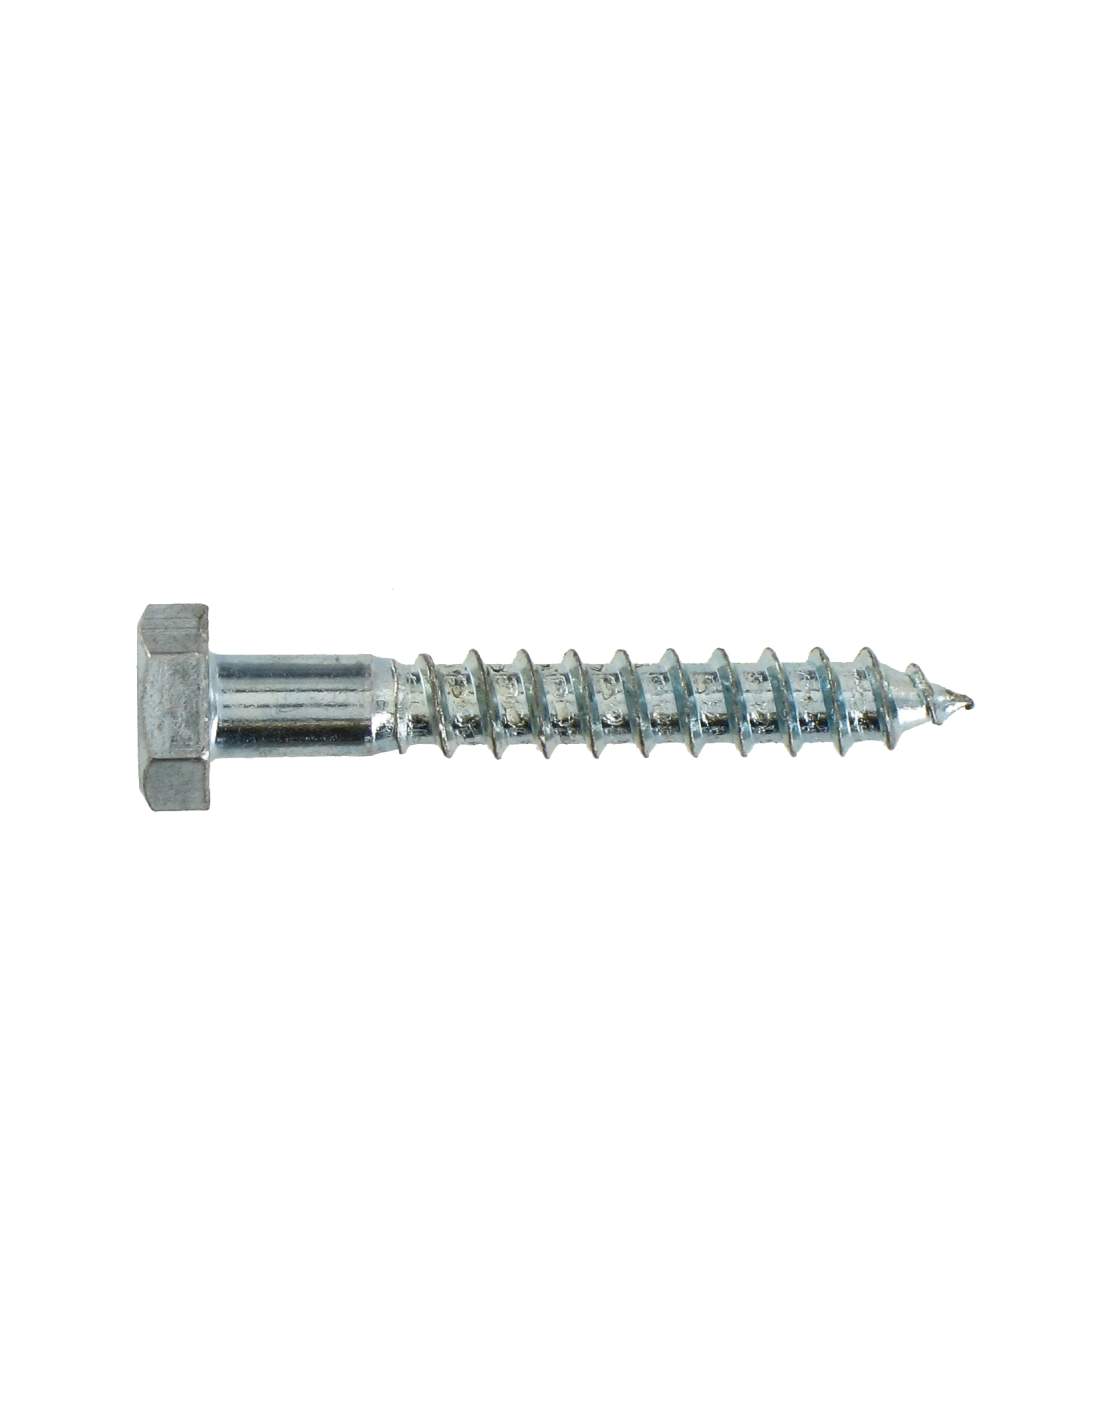 Zinc-plated steel lag bolt 10x80, 2 pieces.